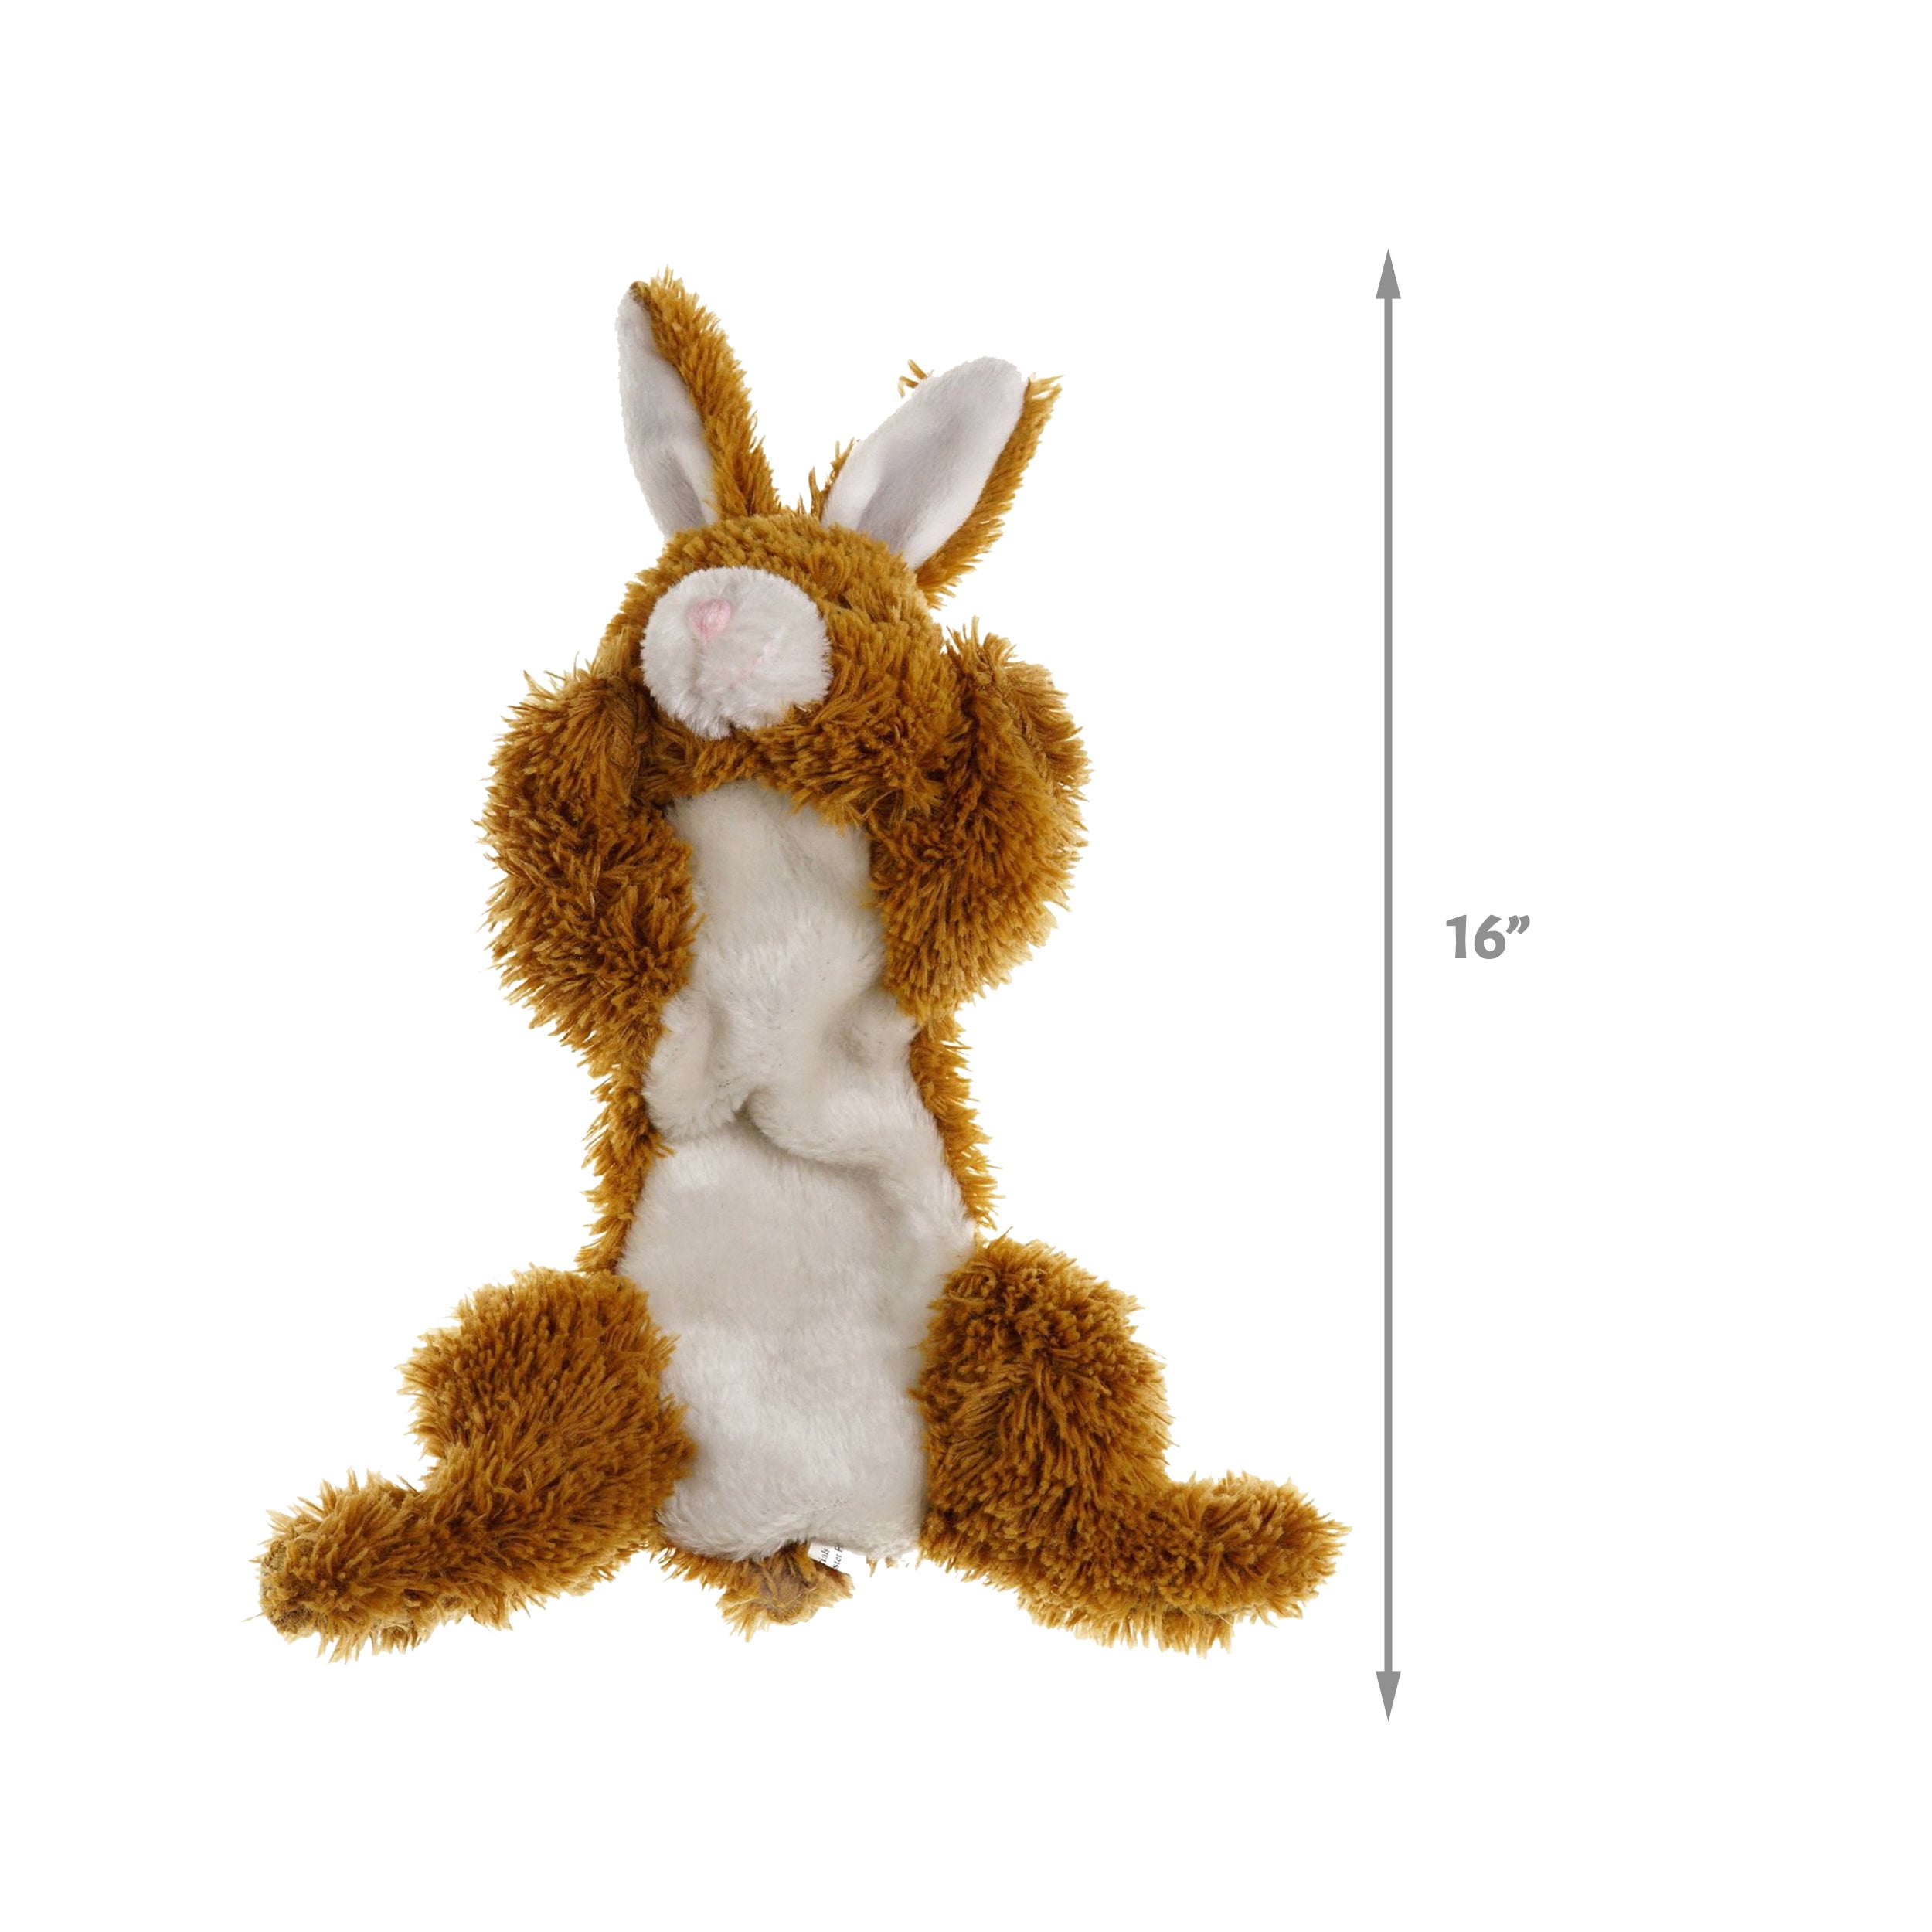 [Dog toy] Squeaky Soft Rabbit